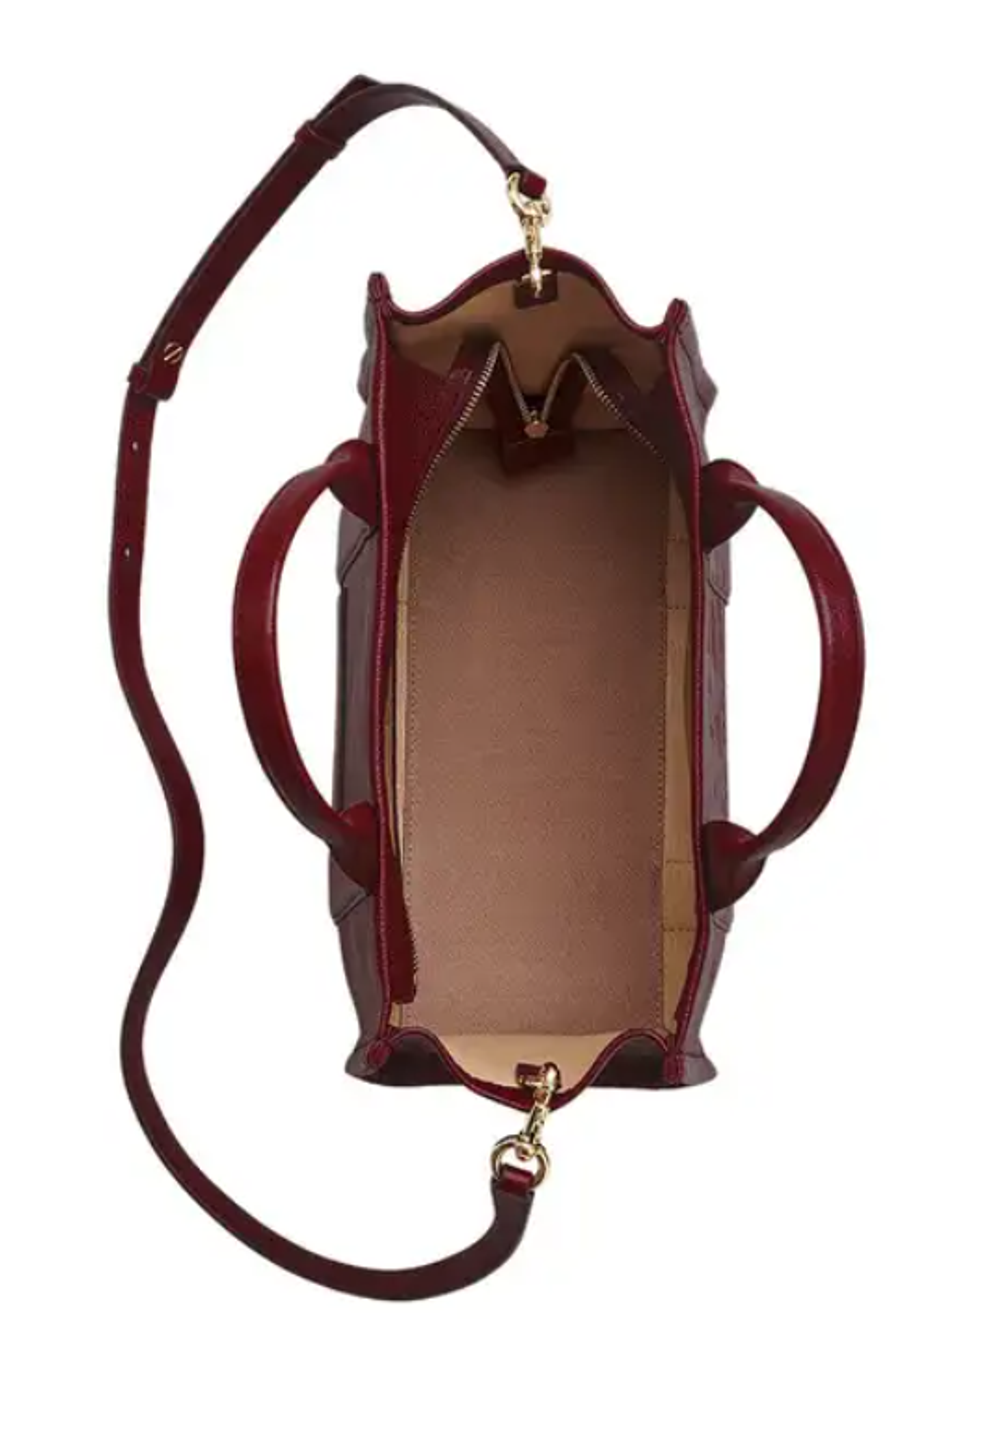 The Leather Medium Tote Bag – Cherry